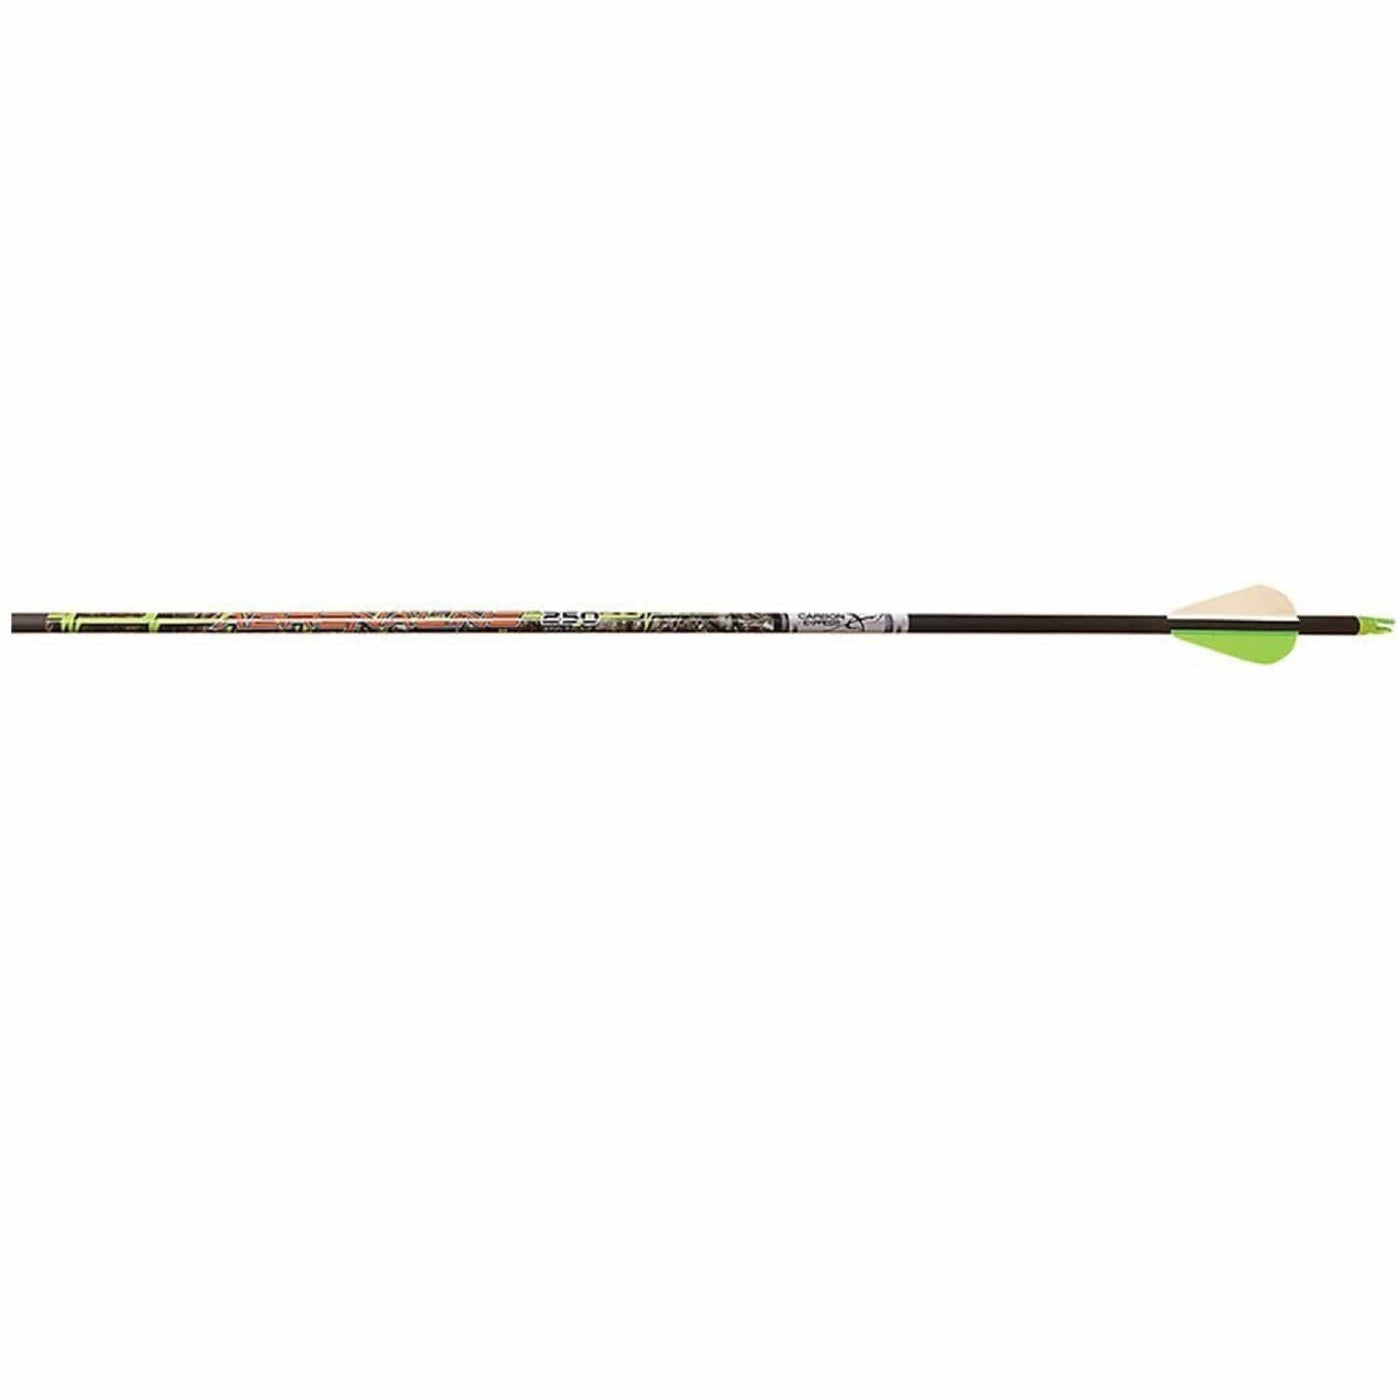 Carbon Express Carbon Express Adrenaline - 6PK Arrows 350 Archery